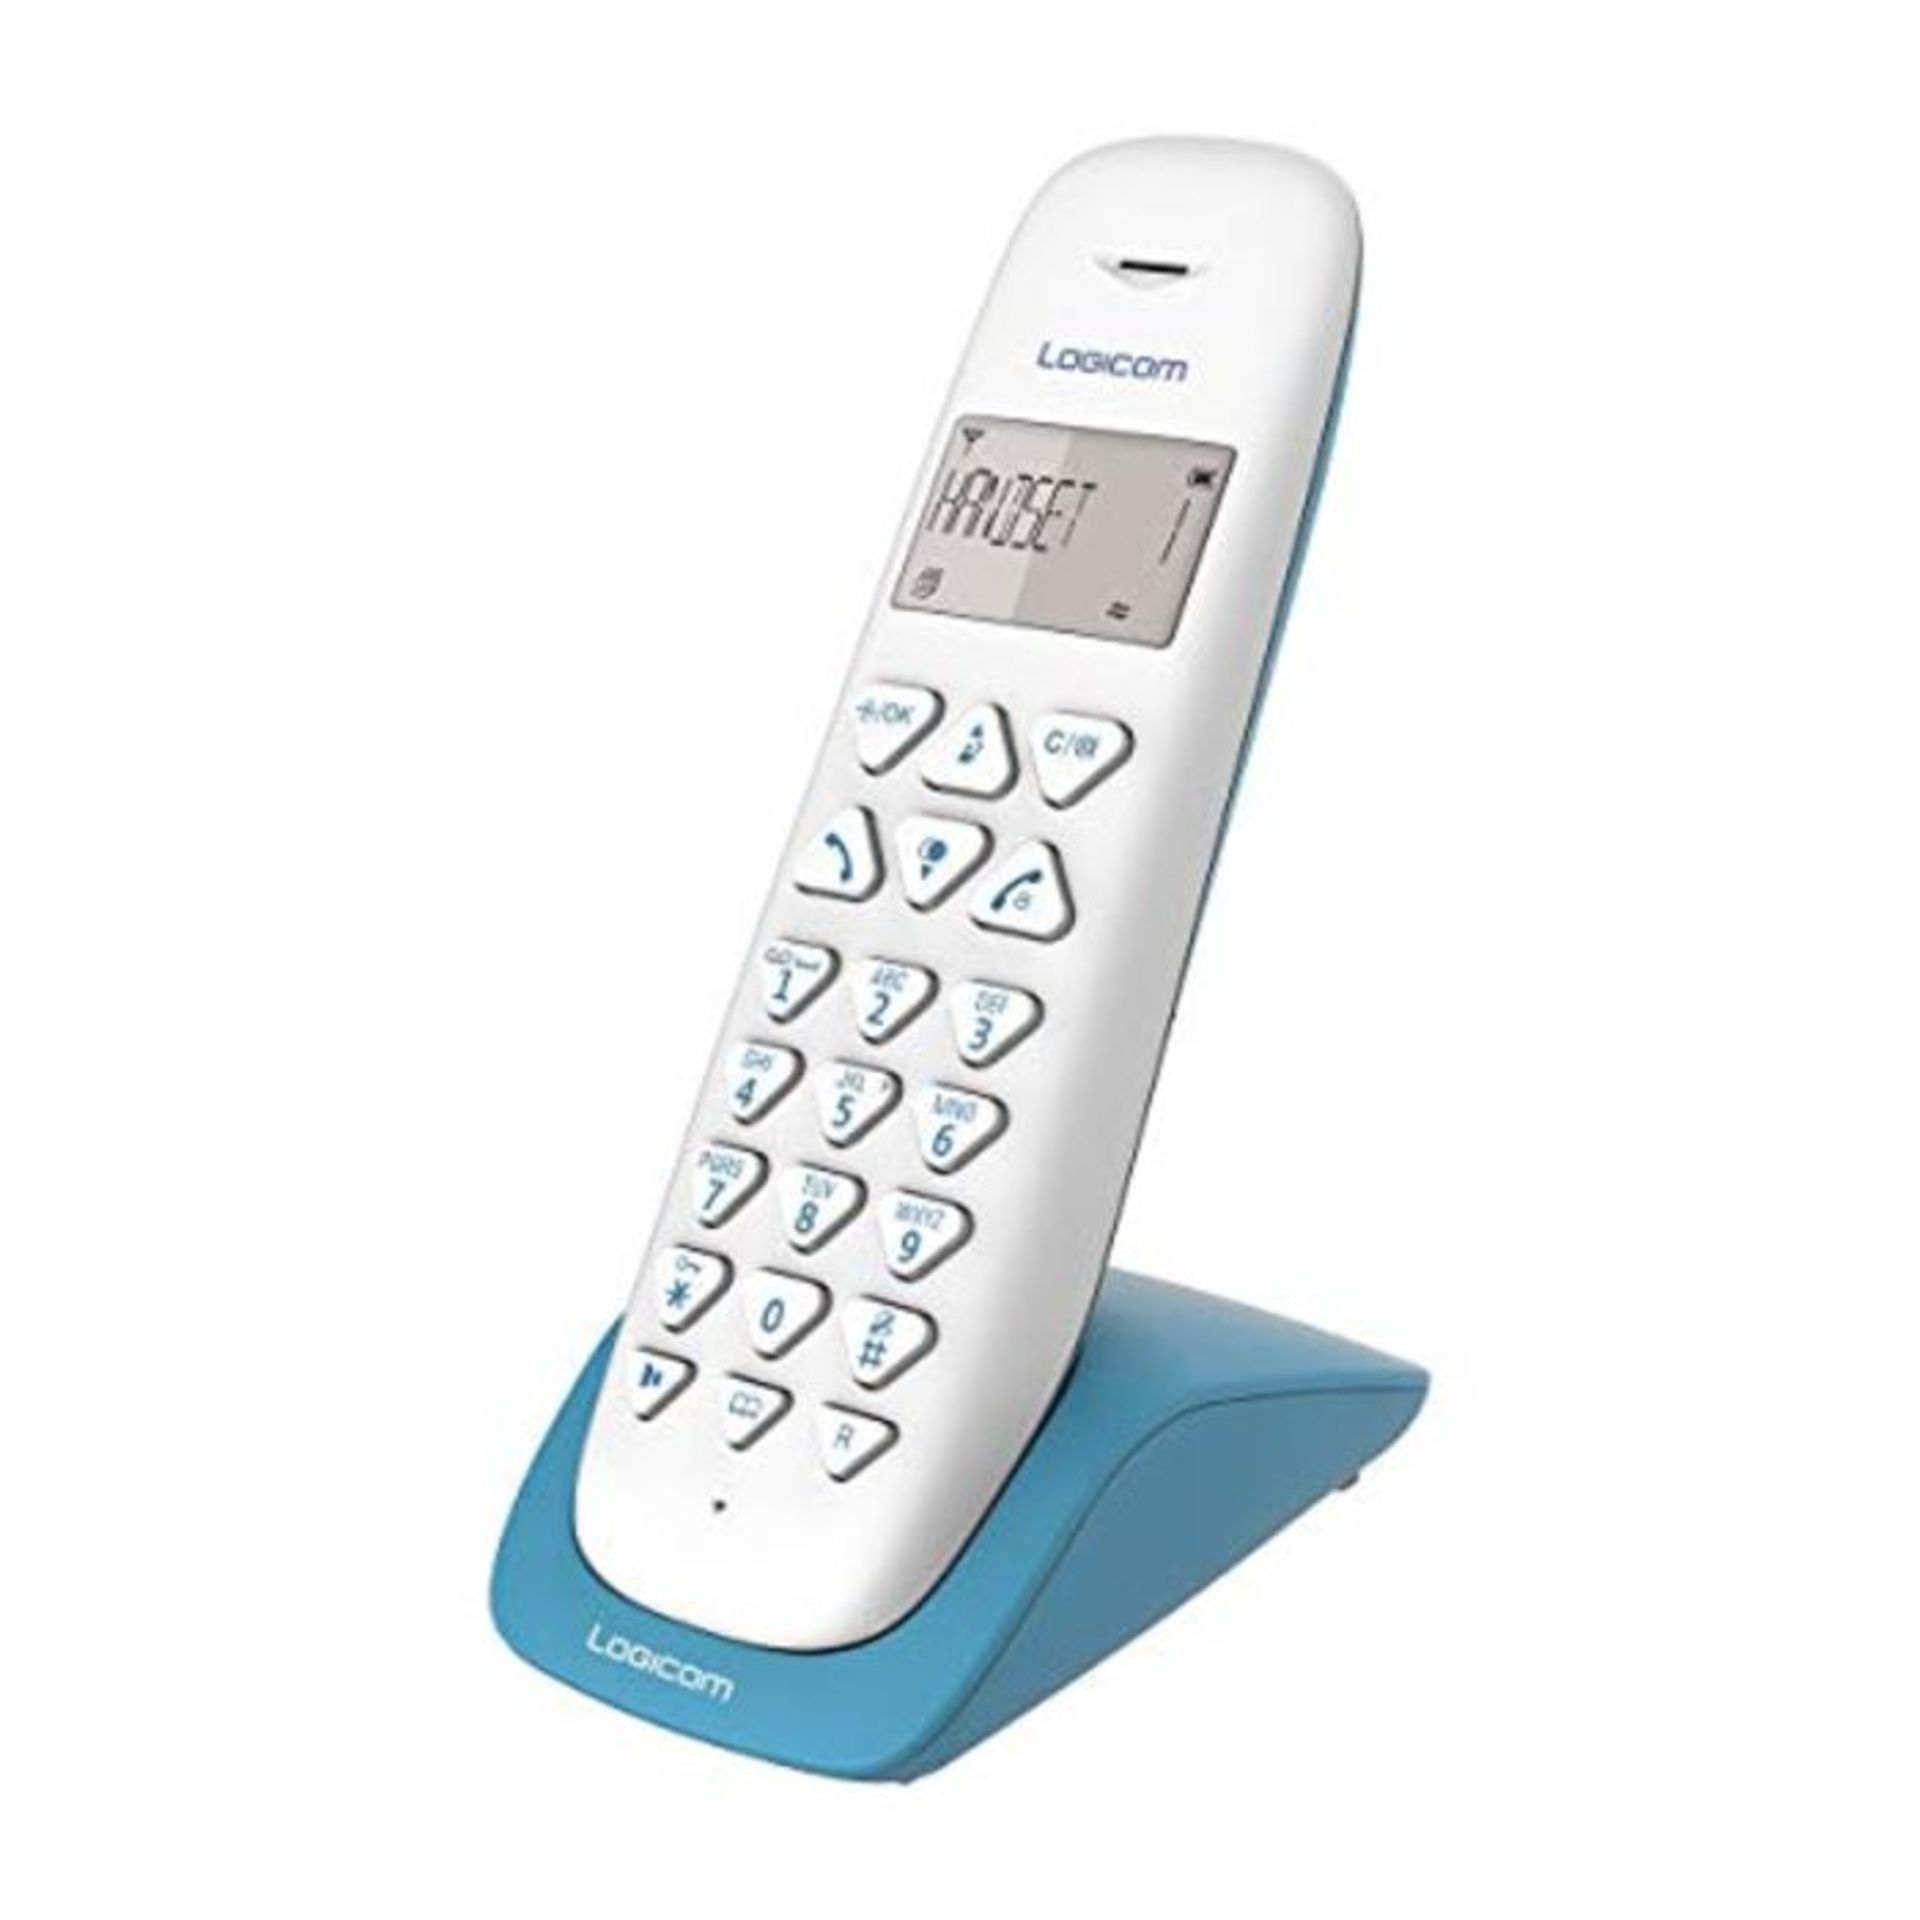 LOGICOM Cordless phone Vega 150 Solo T rkis without answering machine